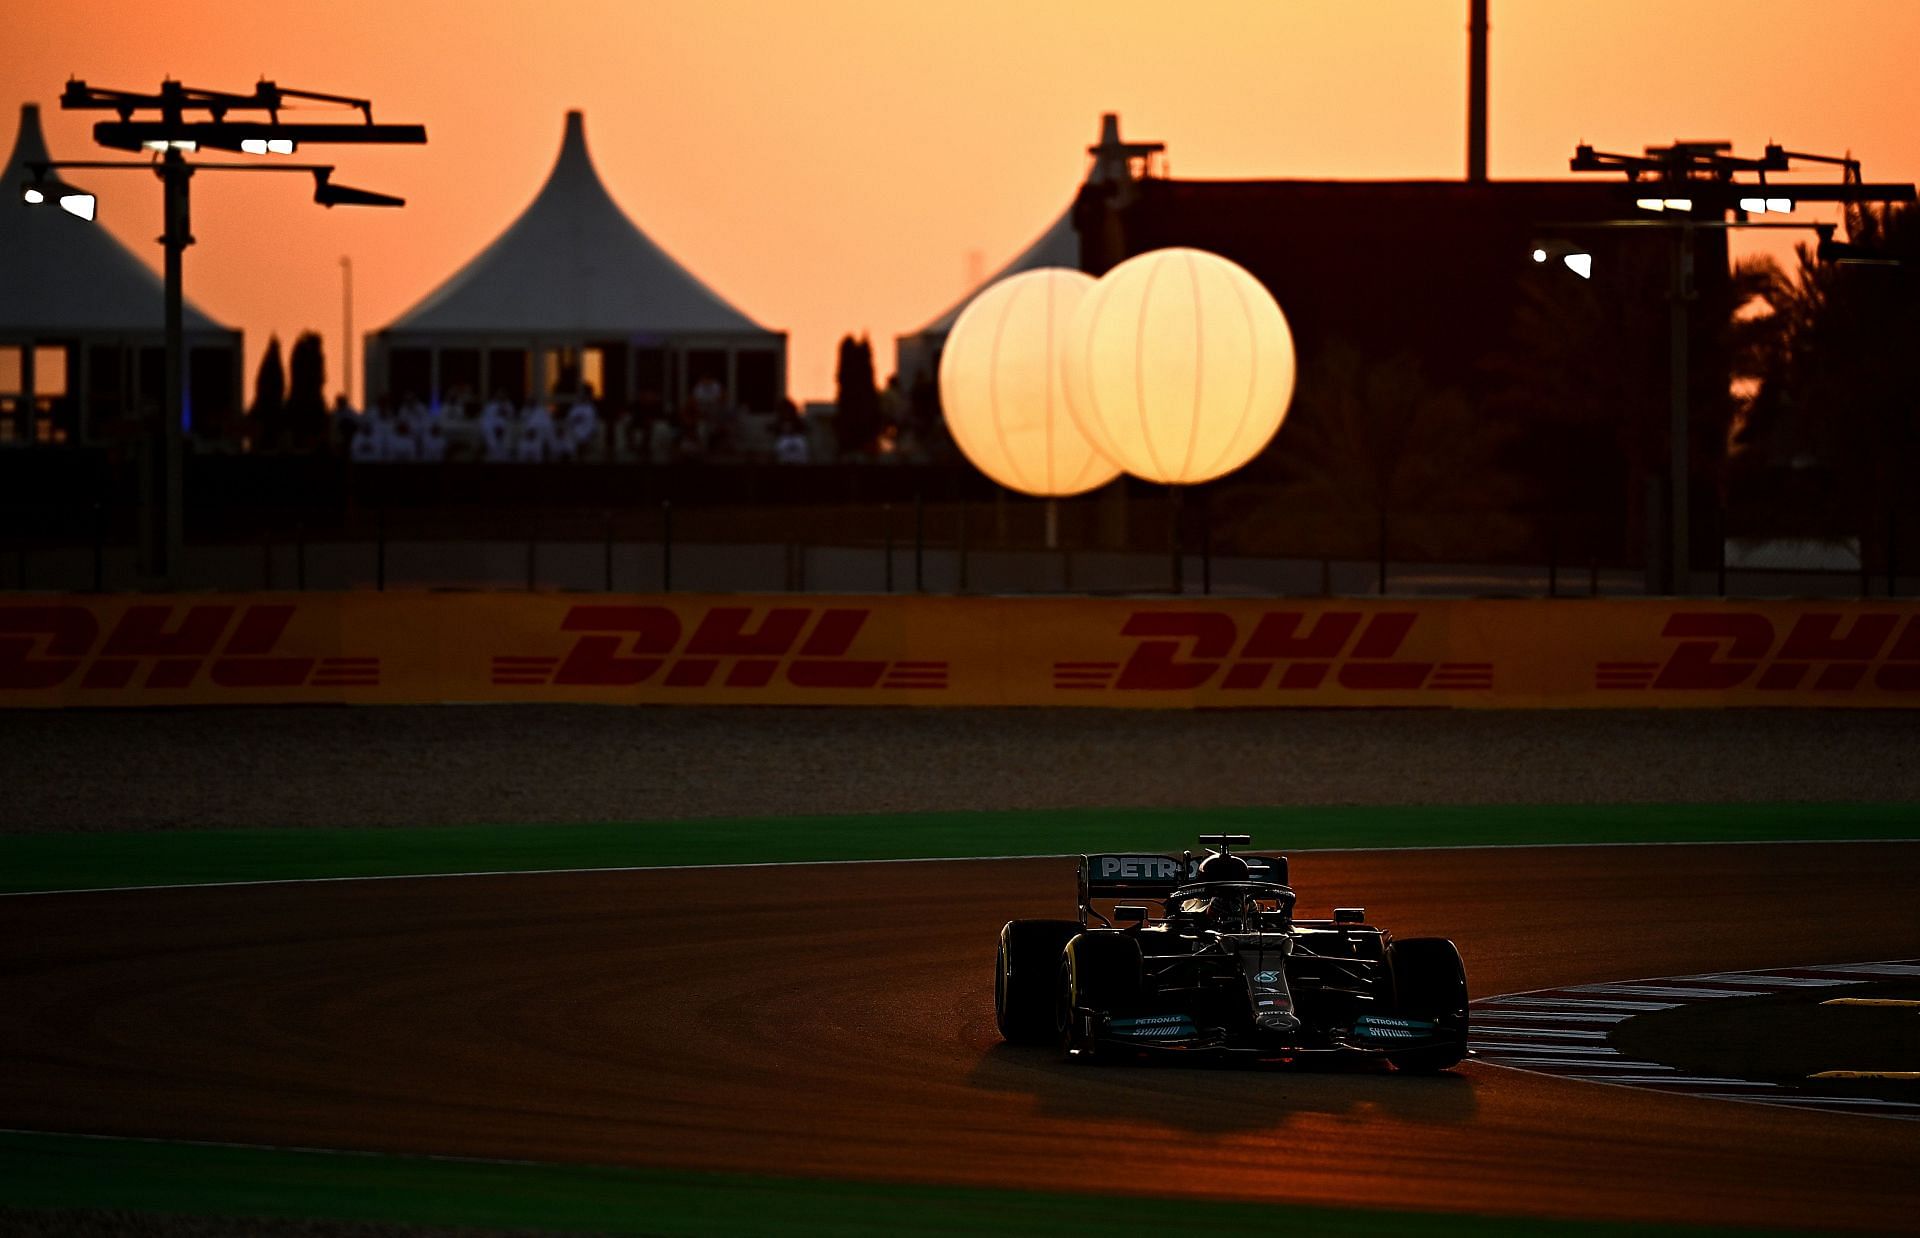 F1 Grand Prix of Qatar - Lewis Hamilton